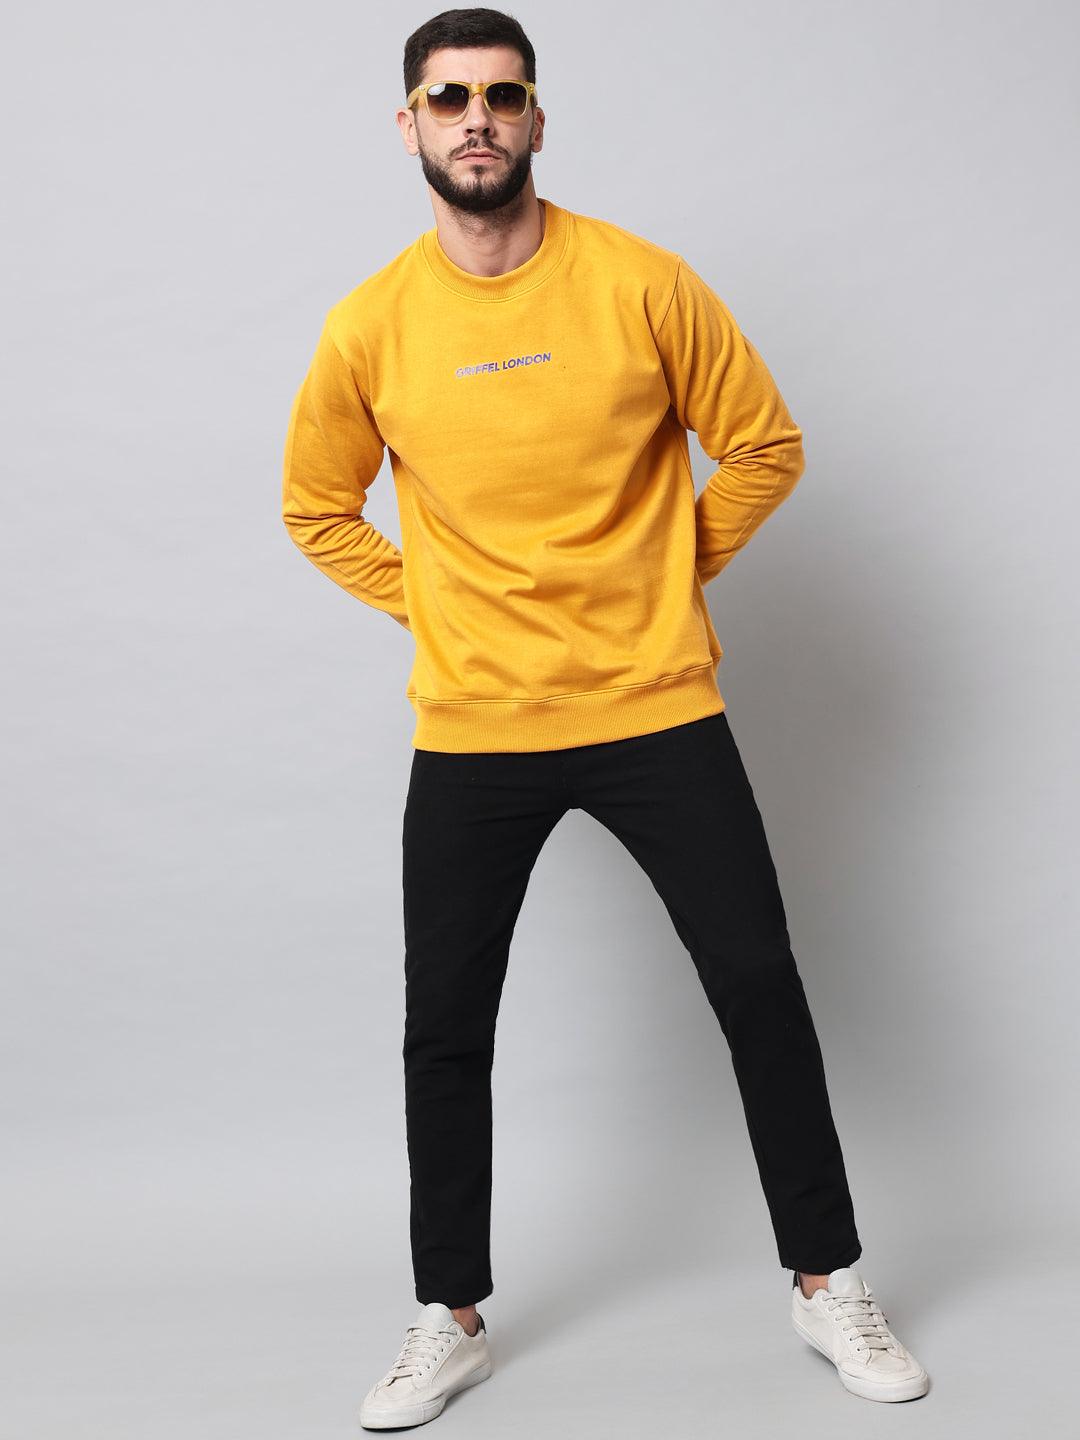 Griffel Men's Cotton Fleece Round Neck Mustard Sweatshirt with Full Sleeve and Front Logo Print - griffel